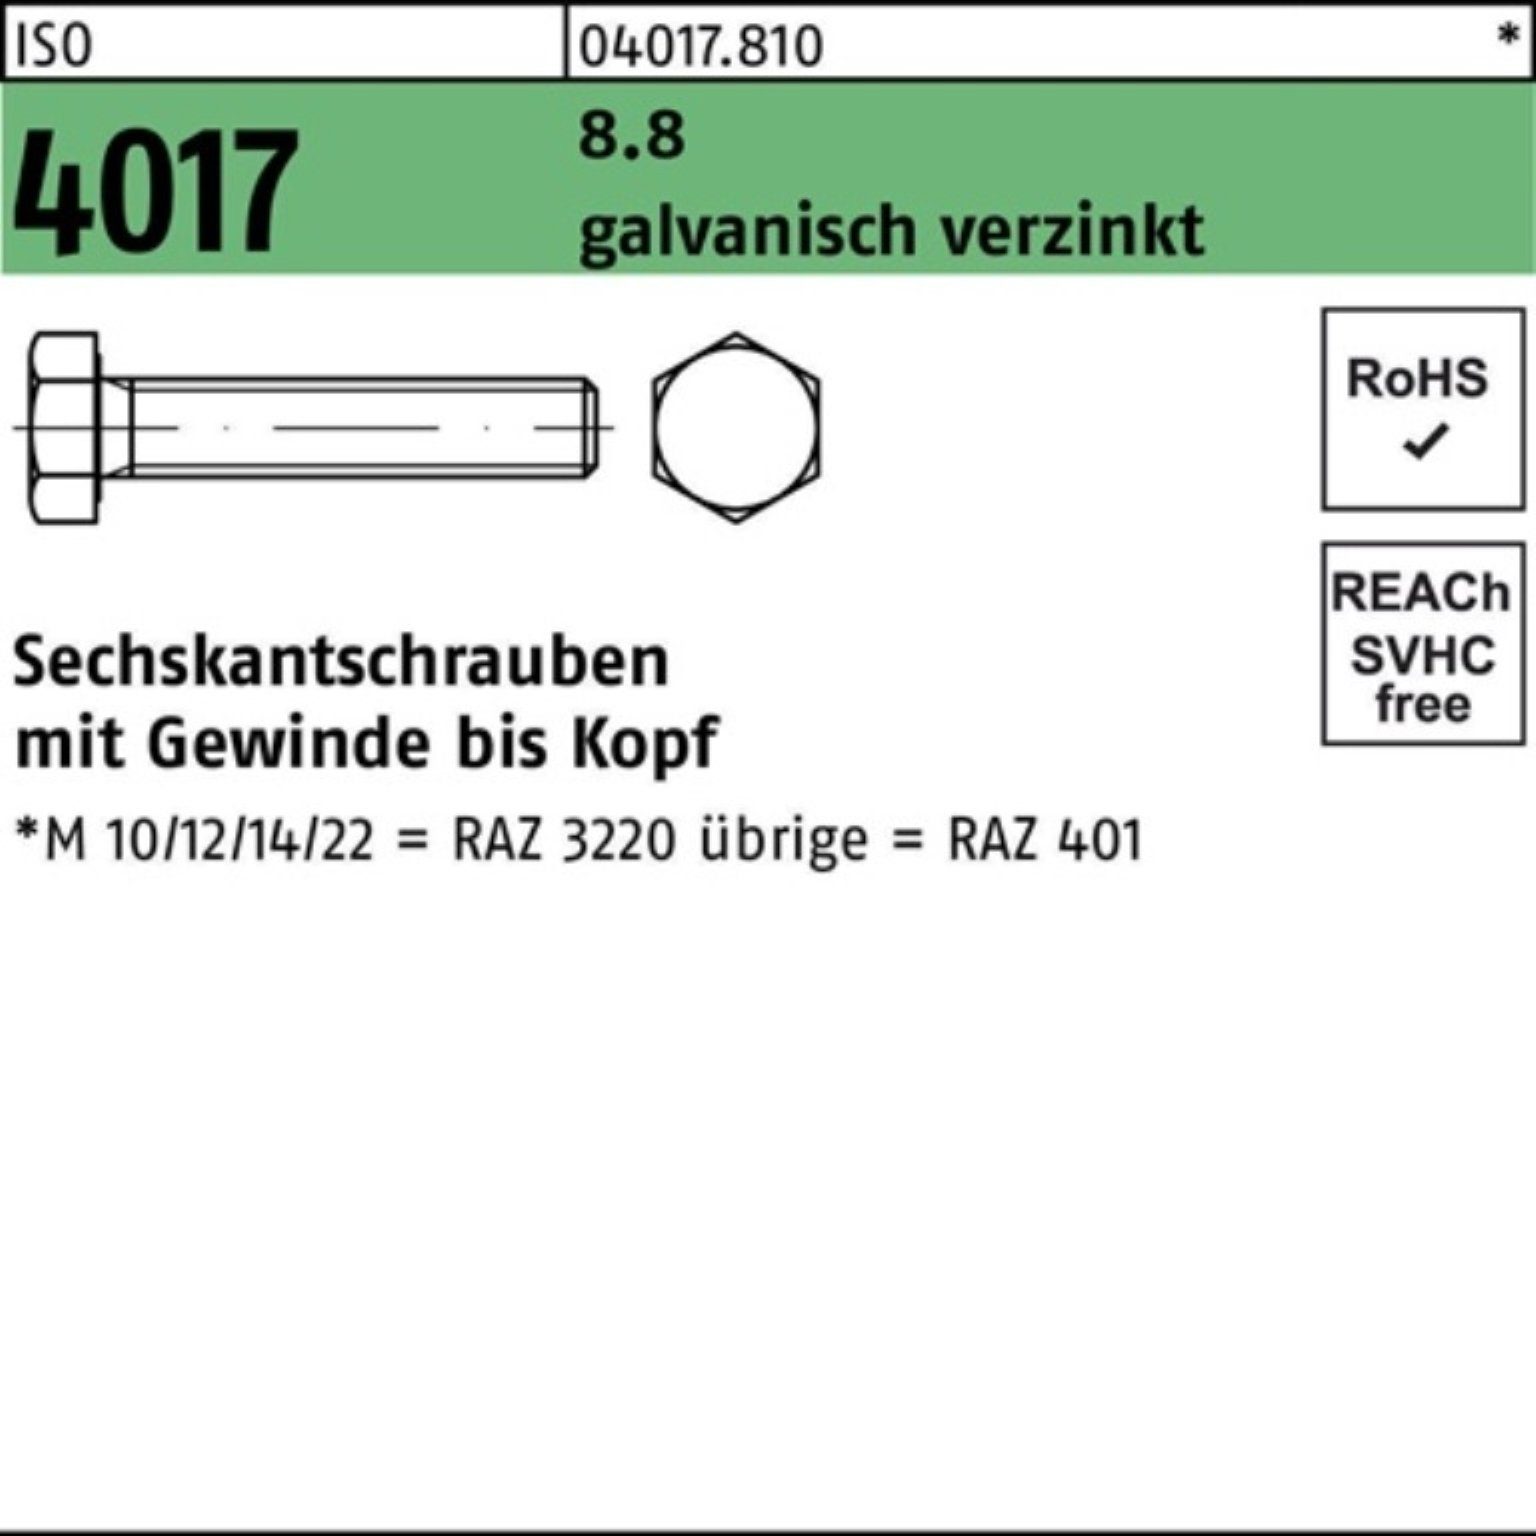 Bufab Sechskantschraube 100er Pack M27x St ISO Sechskantschraube VG 1 180 8.8 galv.verz. 4017